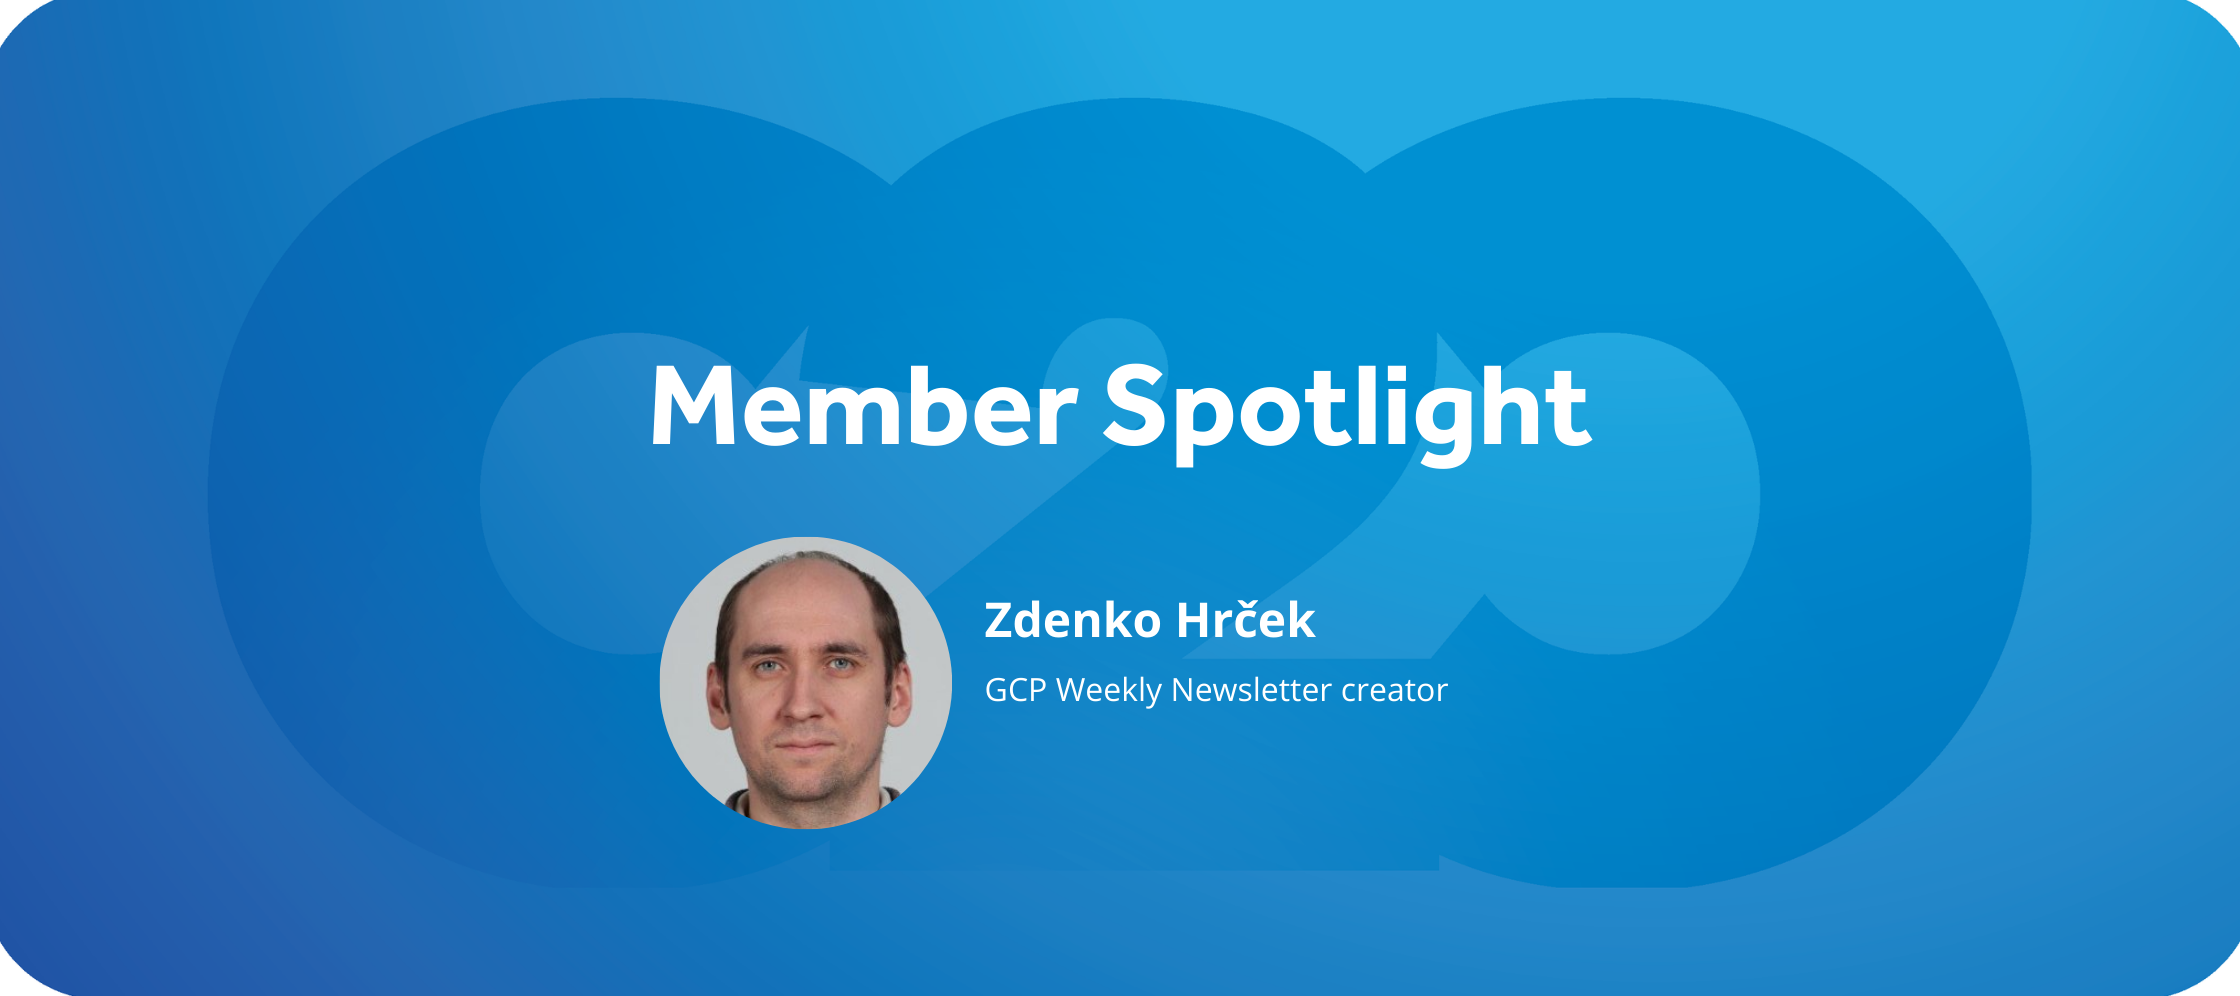 Google Cloud Platform Weekly Newsletter Creator Zdenko Hrček Shares His Career Journey with C2C